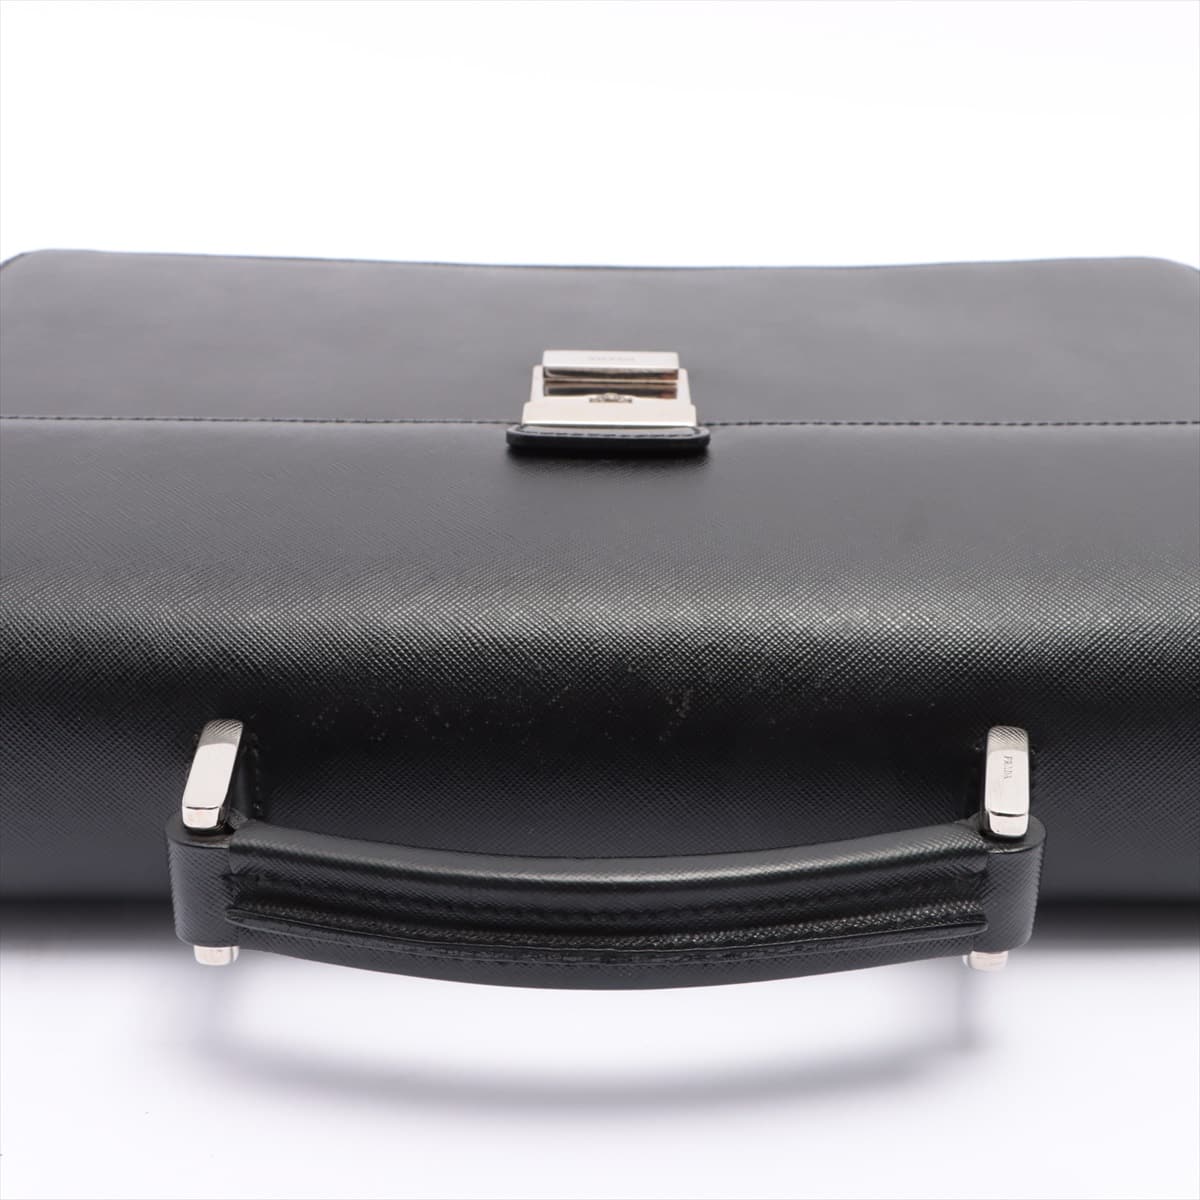 Prada Saffiano Business bag Black VR0021 open papers PIN:000